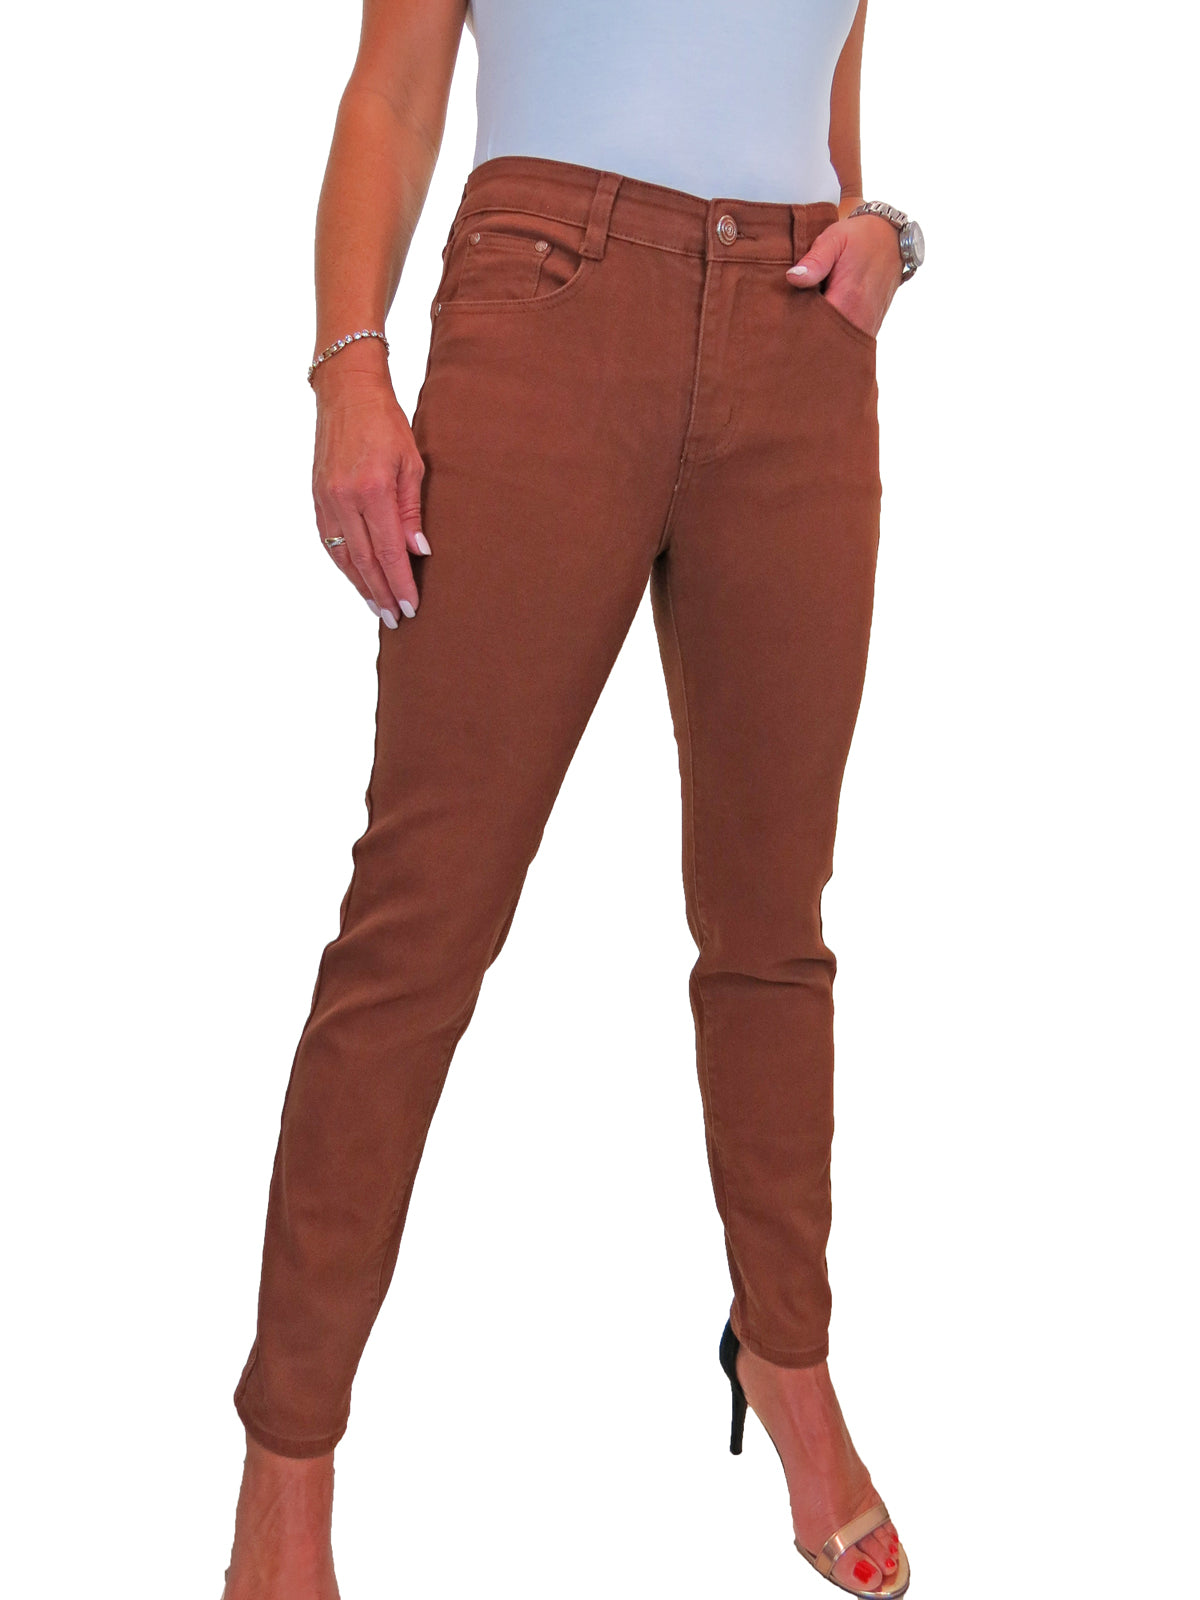 Womens High Waist Stretch Denim Jeans Brown (Rust)